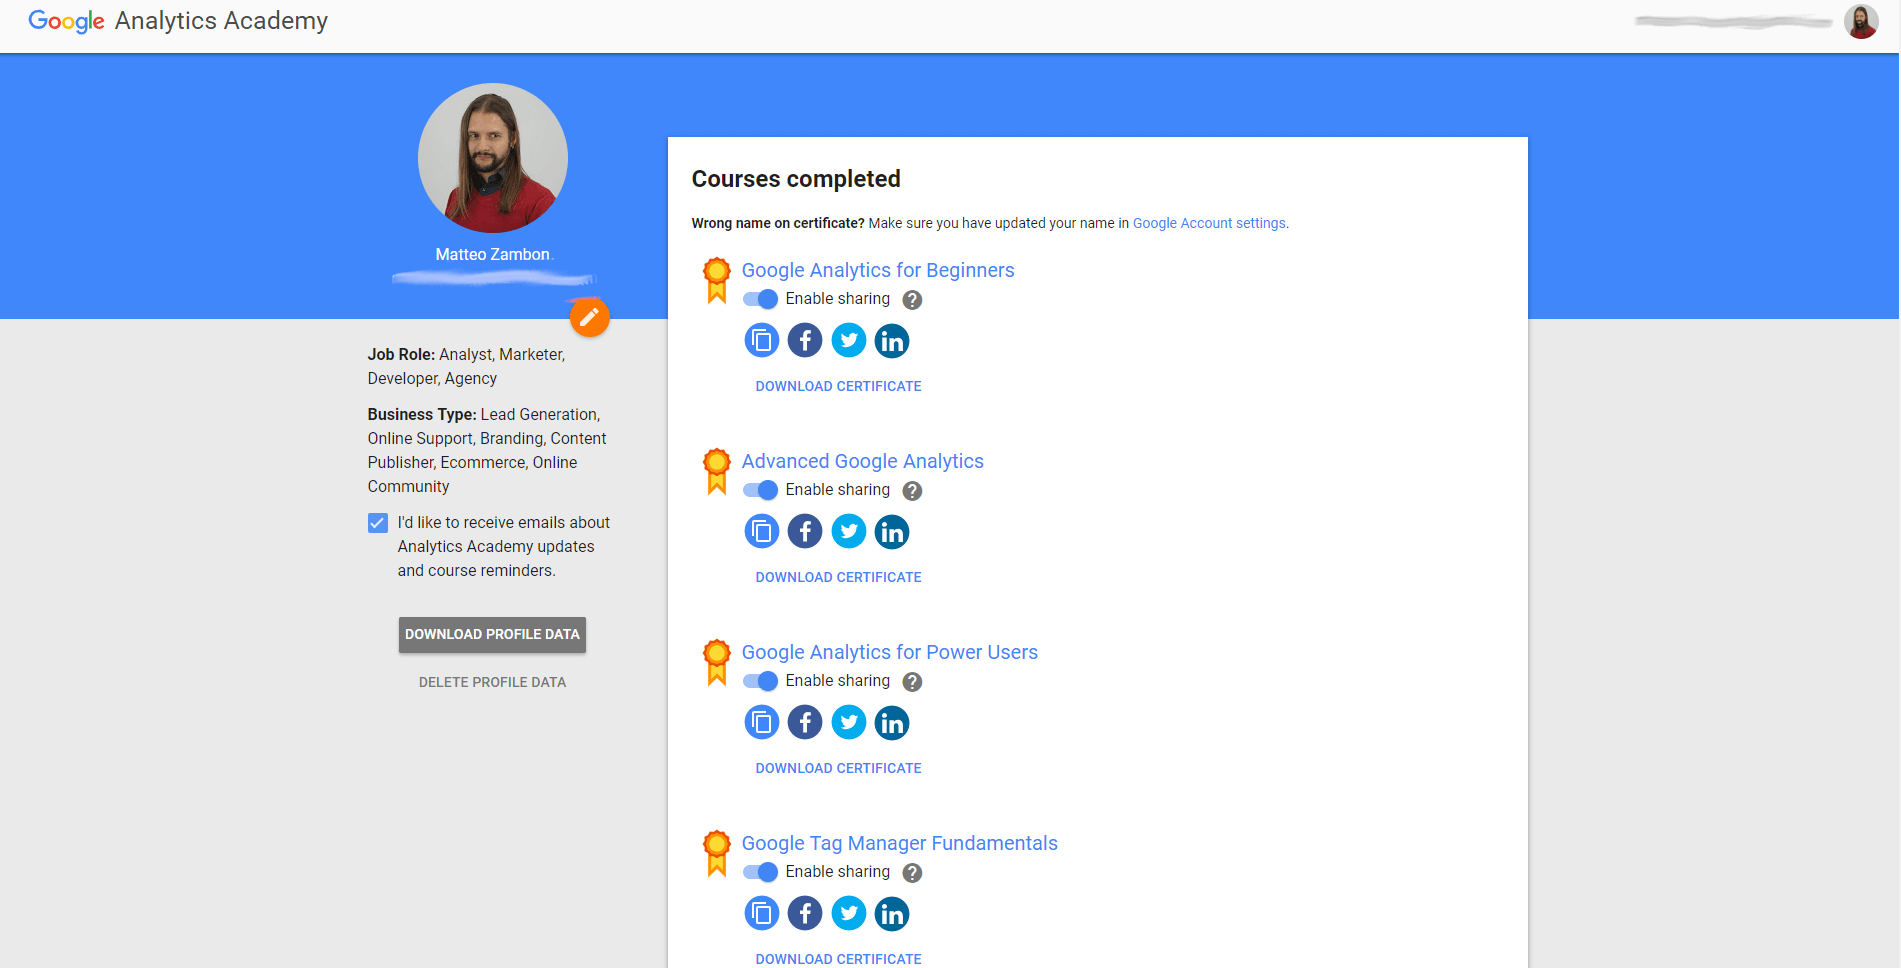 matteo zambon certificazione google tag manager su google analytics academy